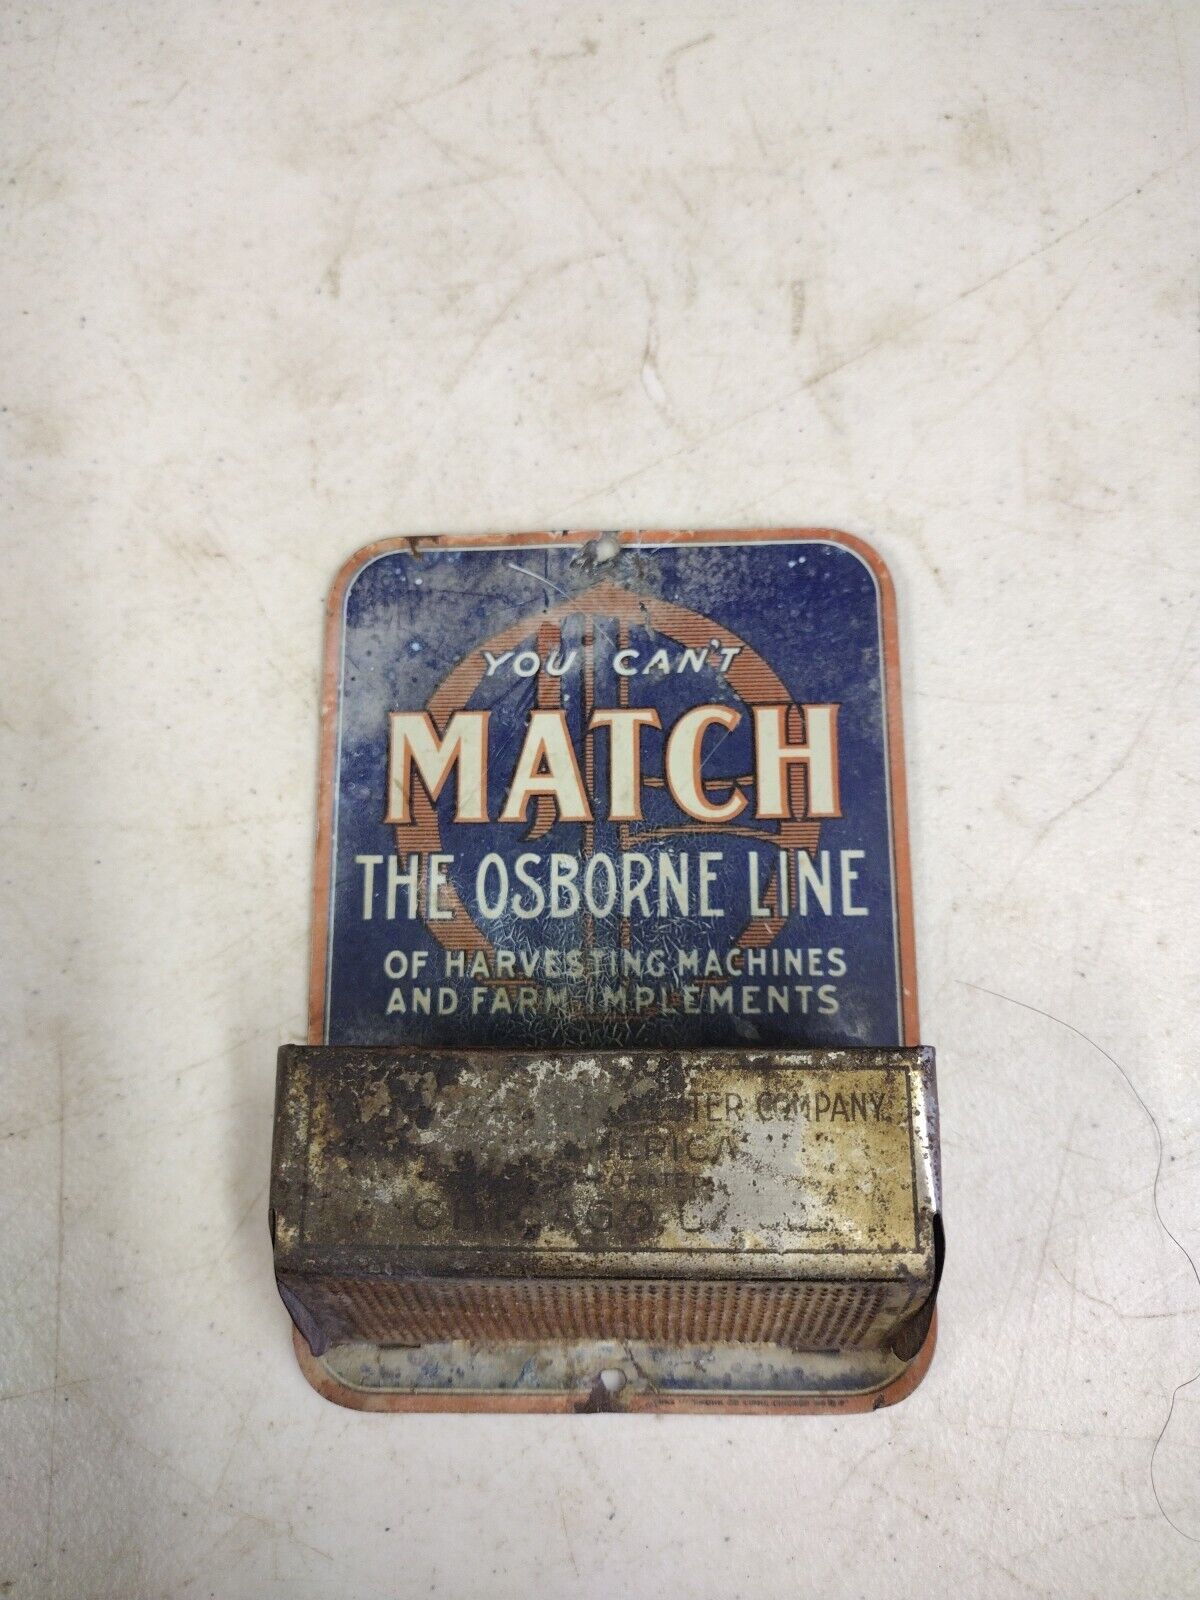 Antique International Harvester Osborne Line Advertising Tin Litho Match Holder